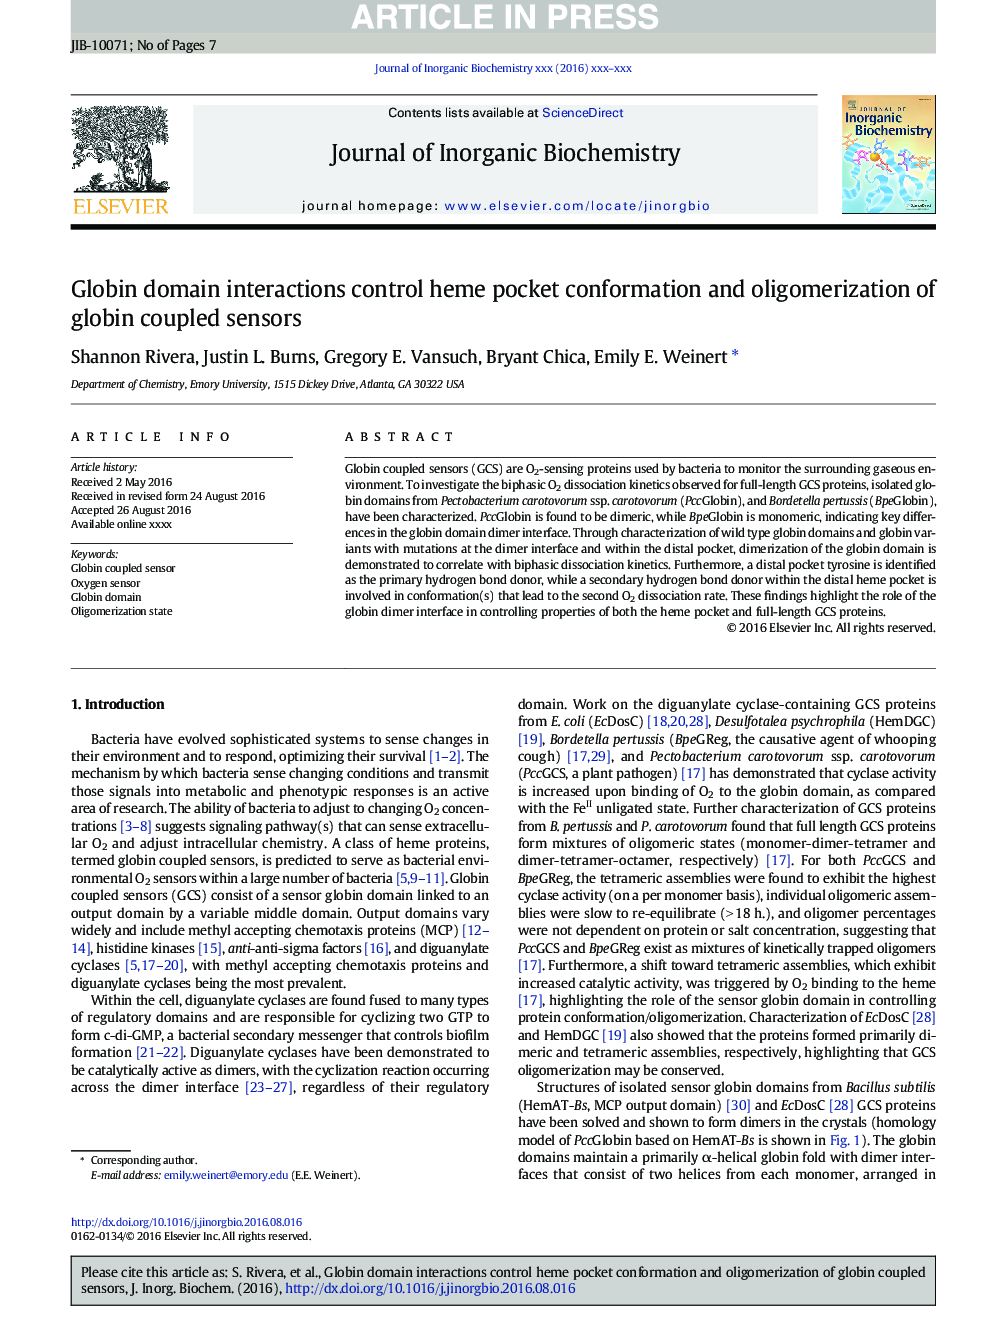 Globin domain interactions control heme pocket conformation and oligomerization of globin coupled sensors